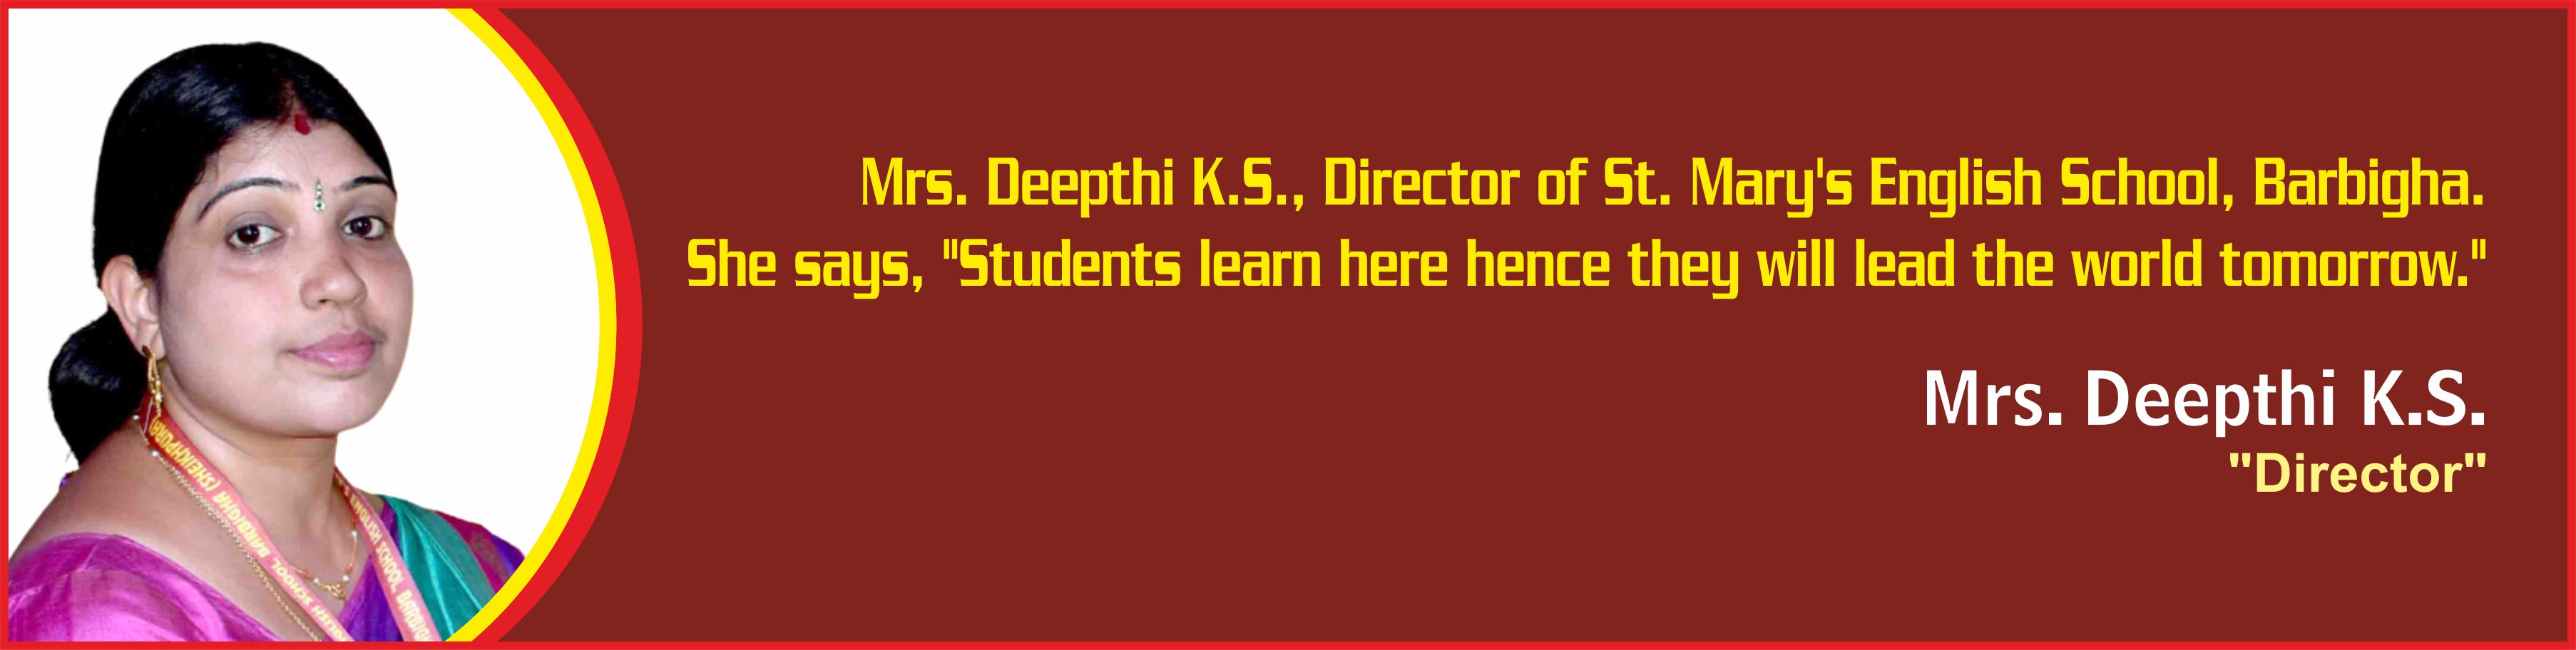 "Mrs. Deepthi K.S. [Director]"